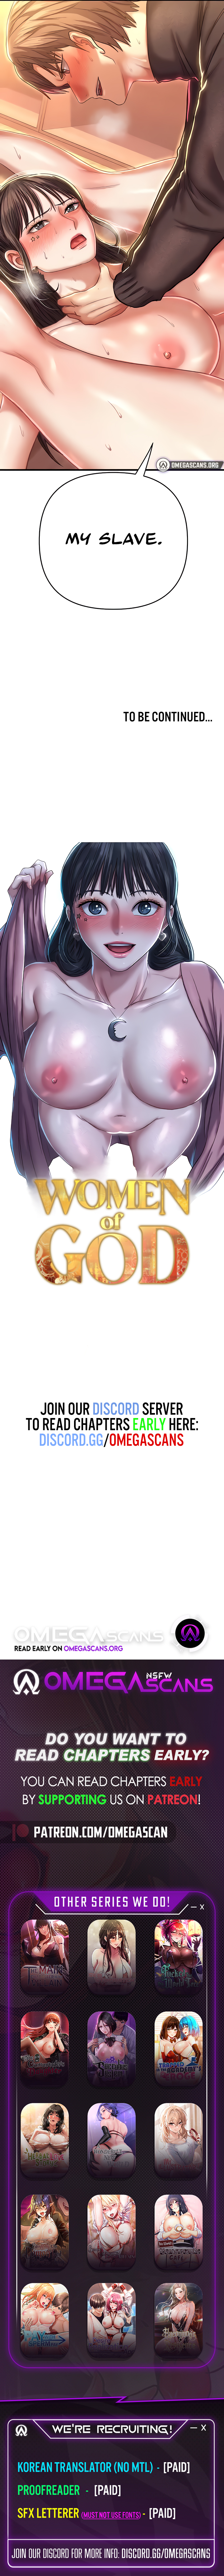 Women of God image